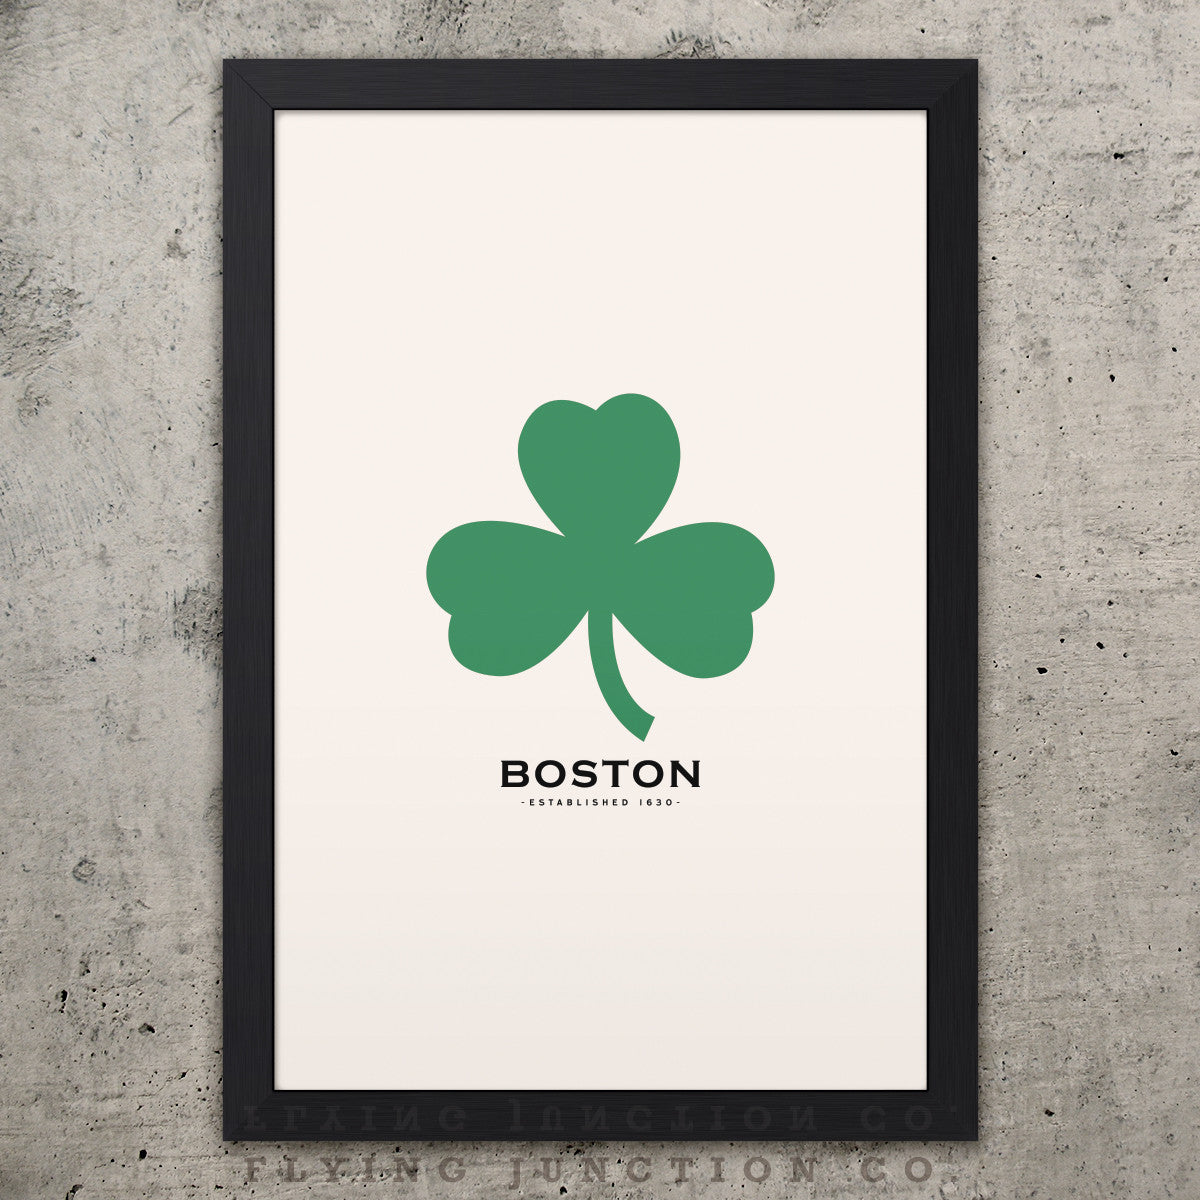 Boston Minimalist City Poster - Ivory